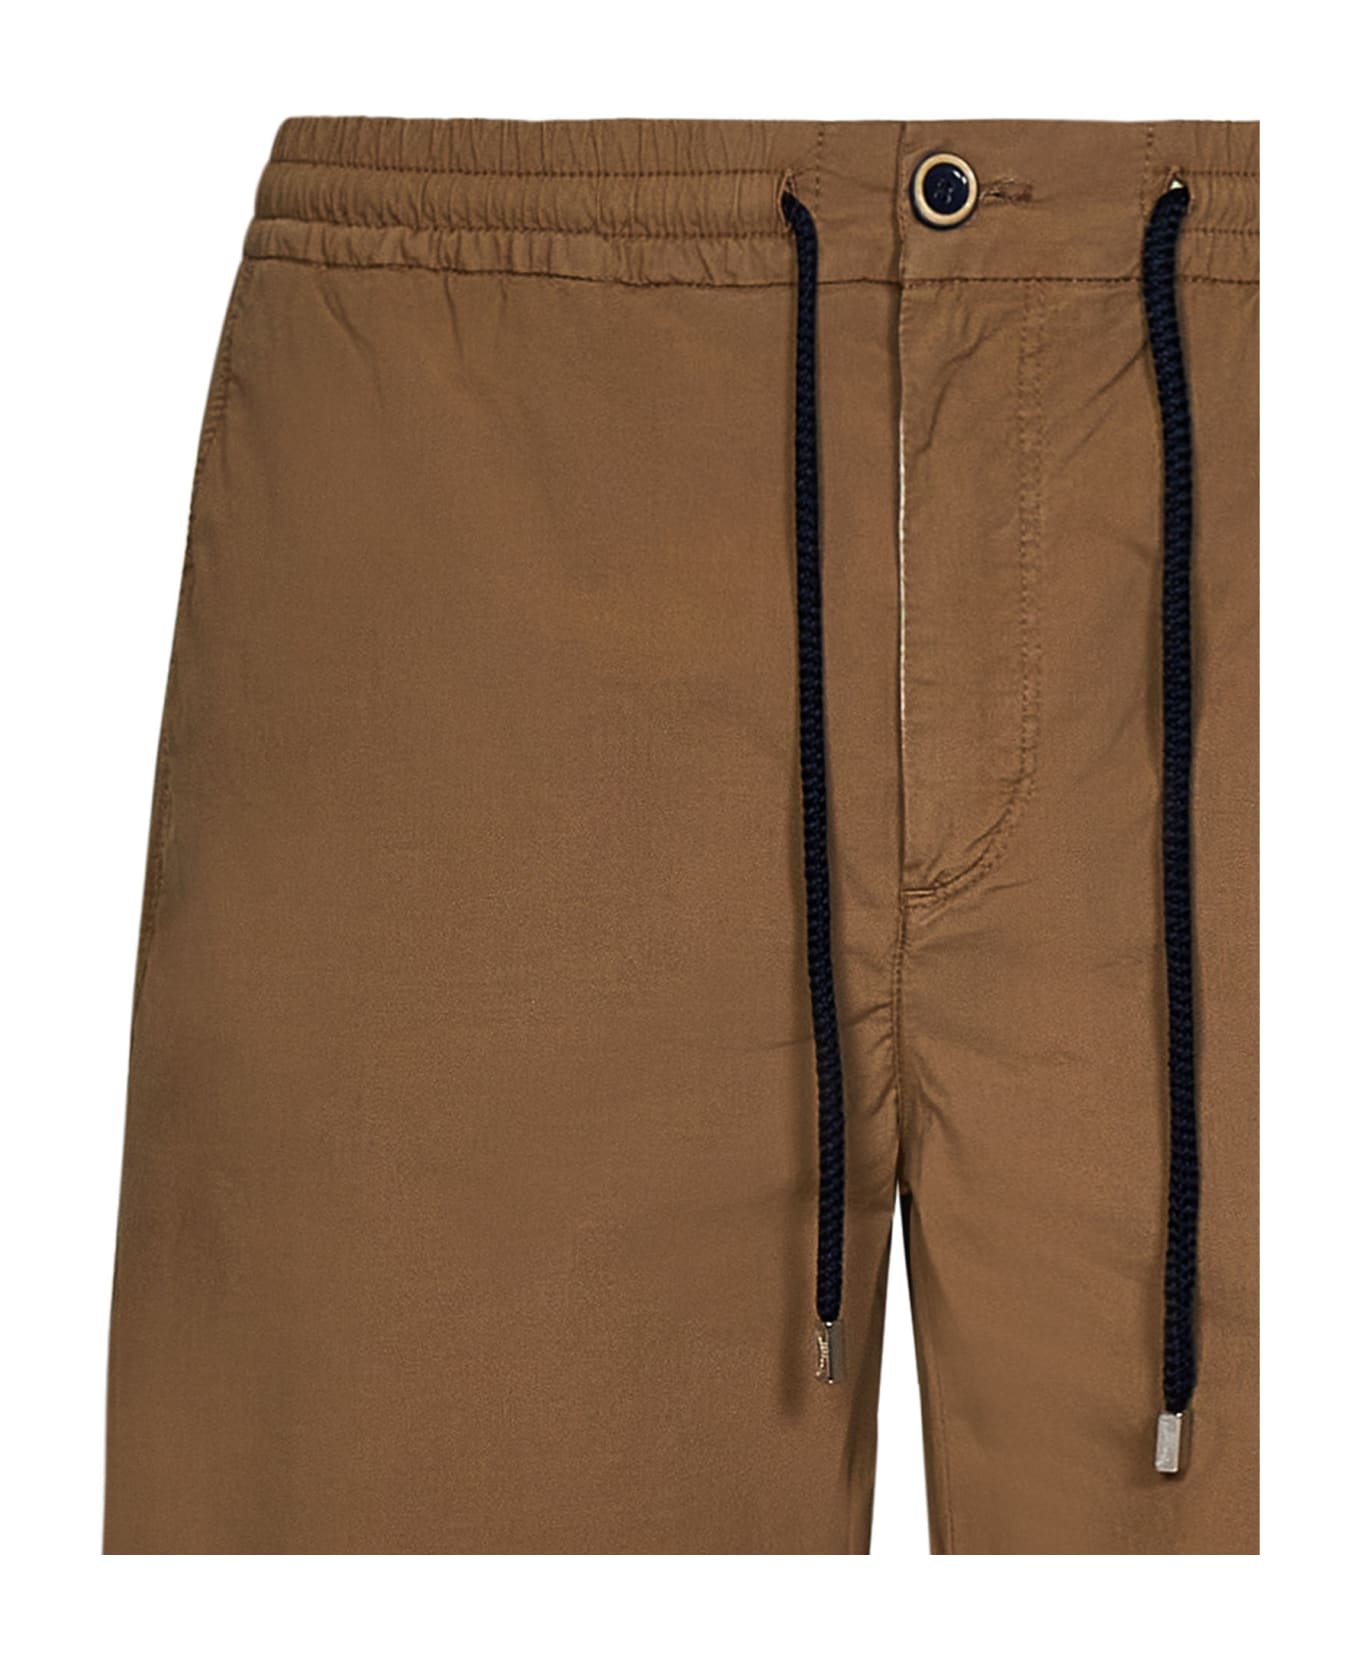 Vilebrequin Shorts - Brown